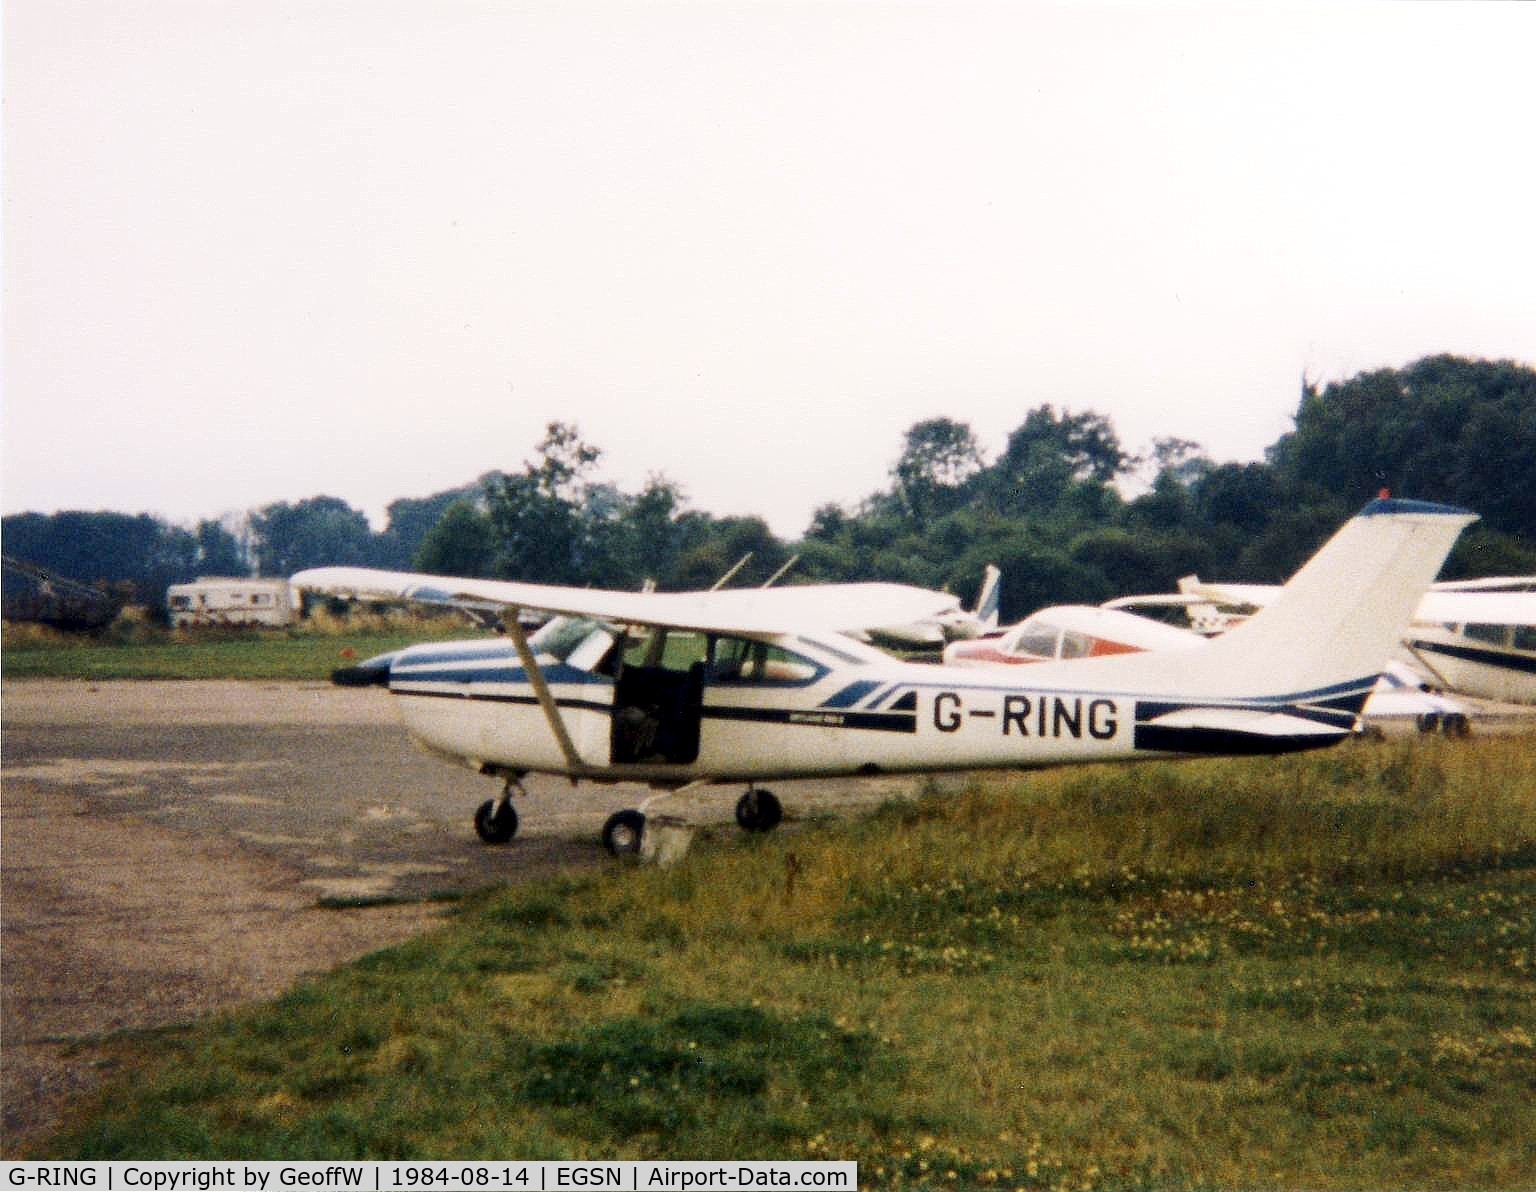 G-RING, 1979 Reims FR182 Skylane RG C/N 0025, Cessna FR182 RG photographed at Bourn in 1984